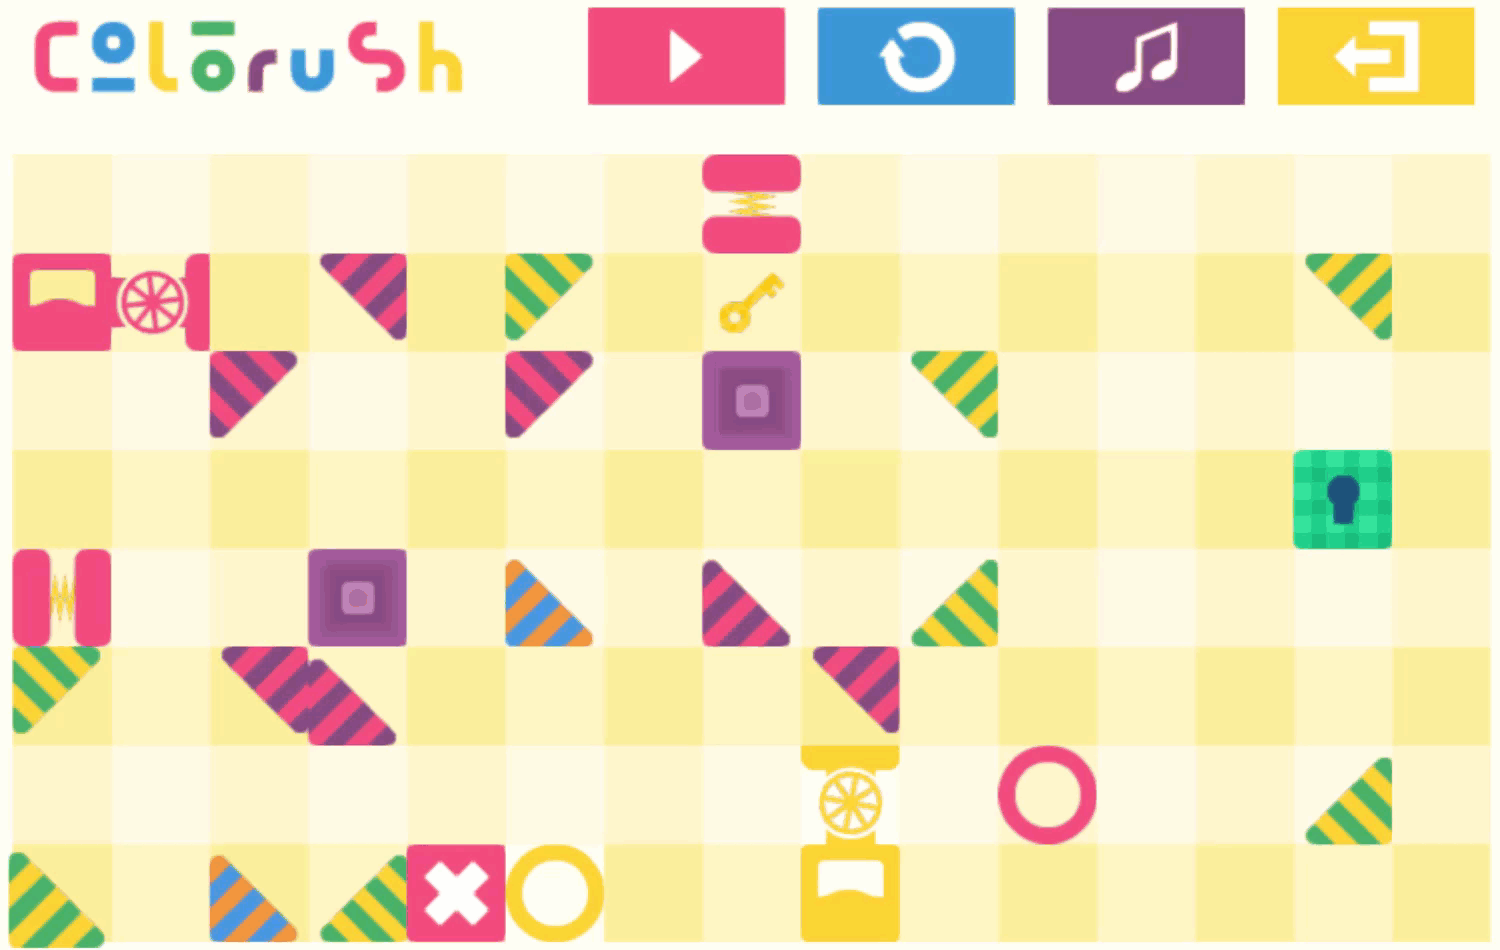 Colorush Game Level 27 Screenshot.